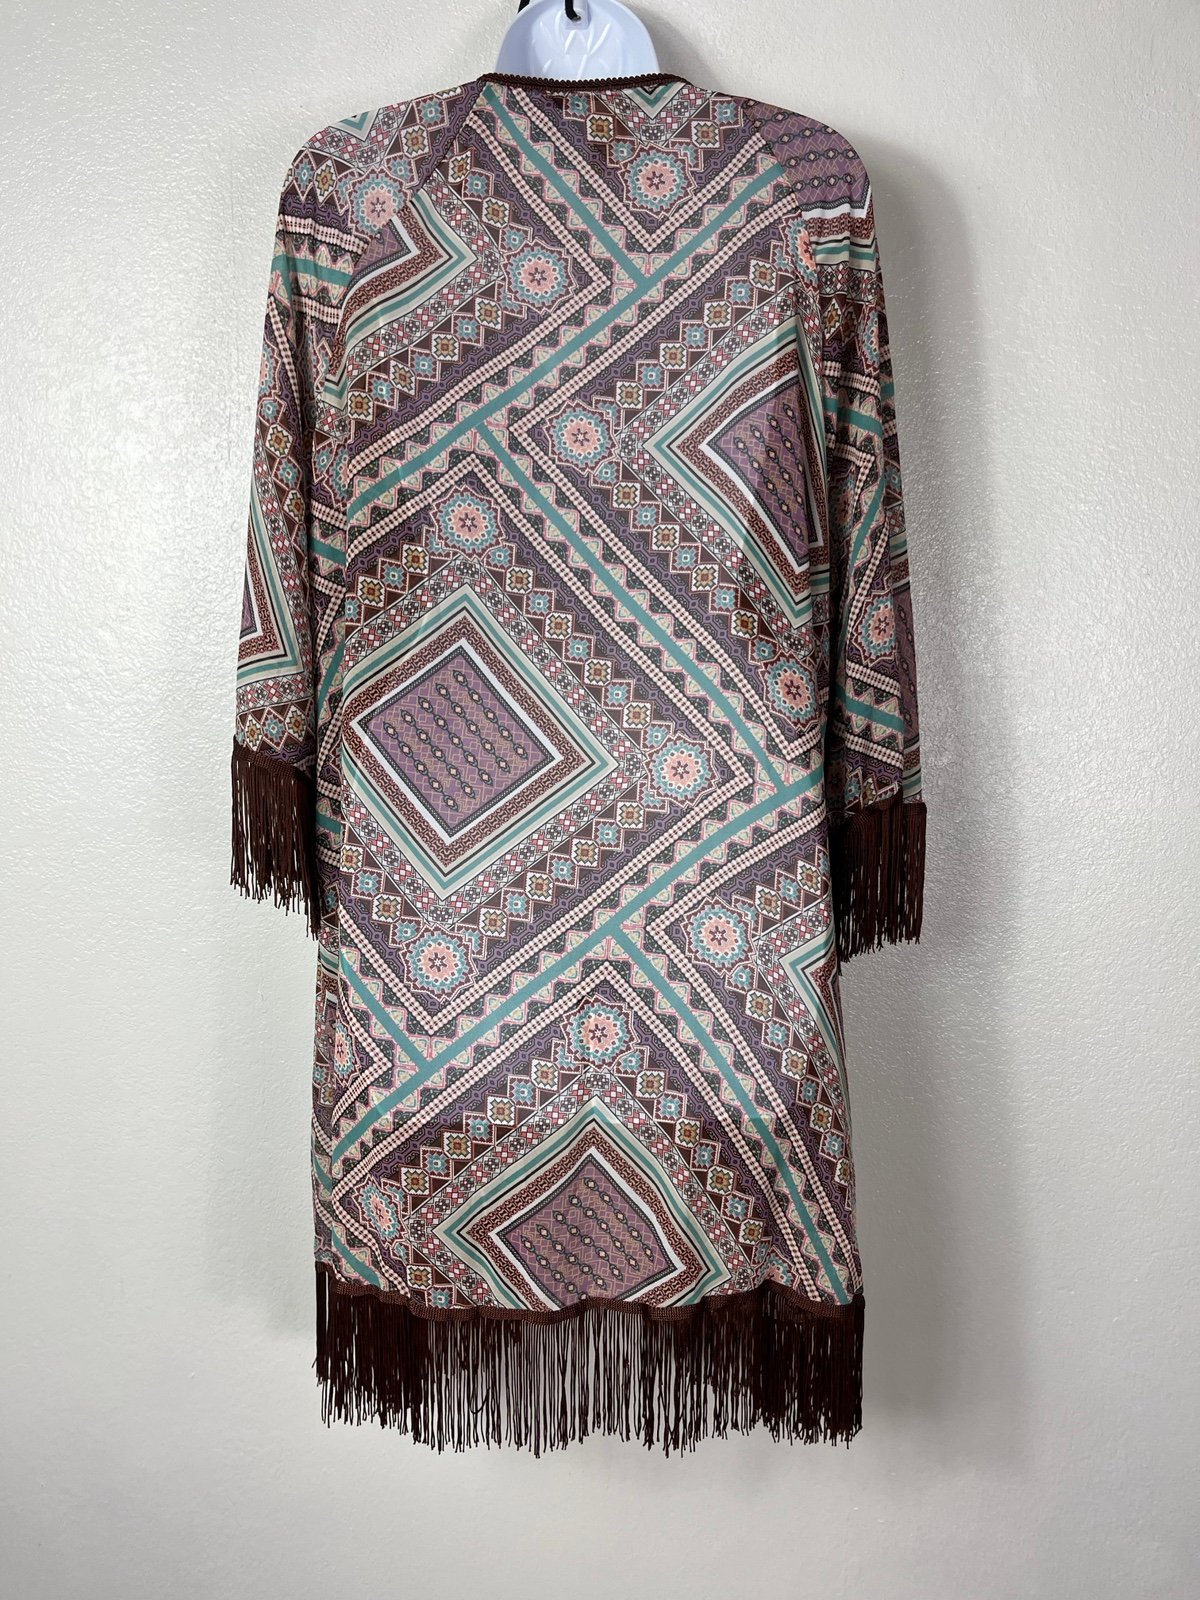 Popular American Rag Kimono brown fringe multicolor pattern small/medium kimono coverup iyQbH6XEP Great